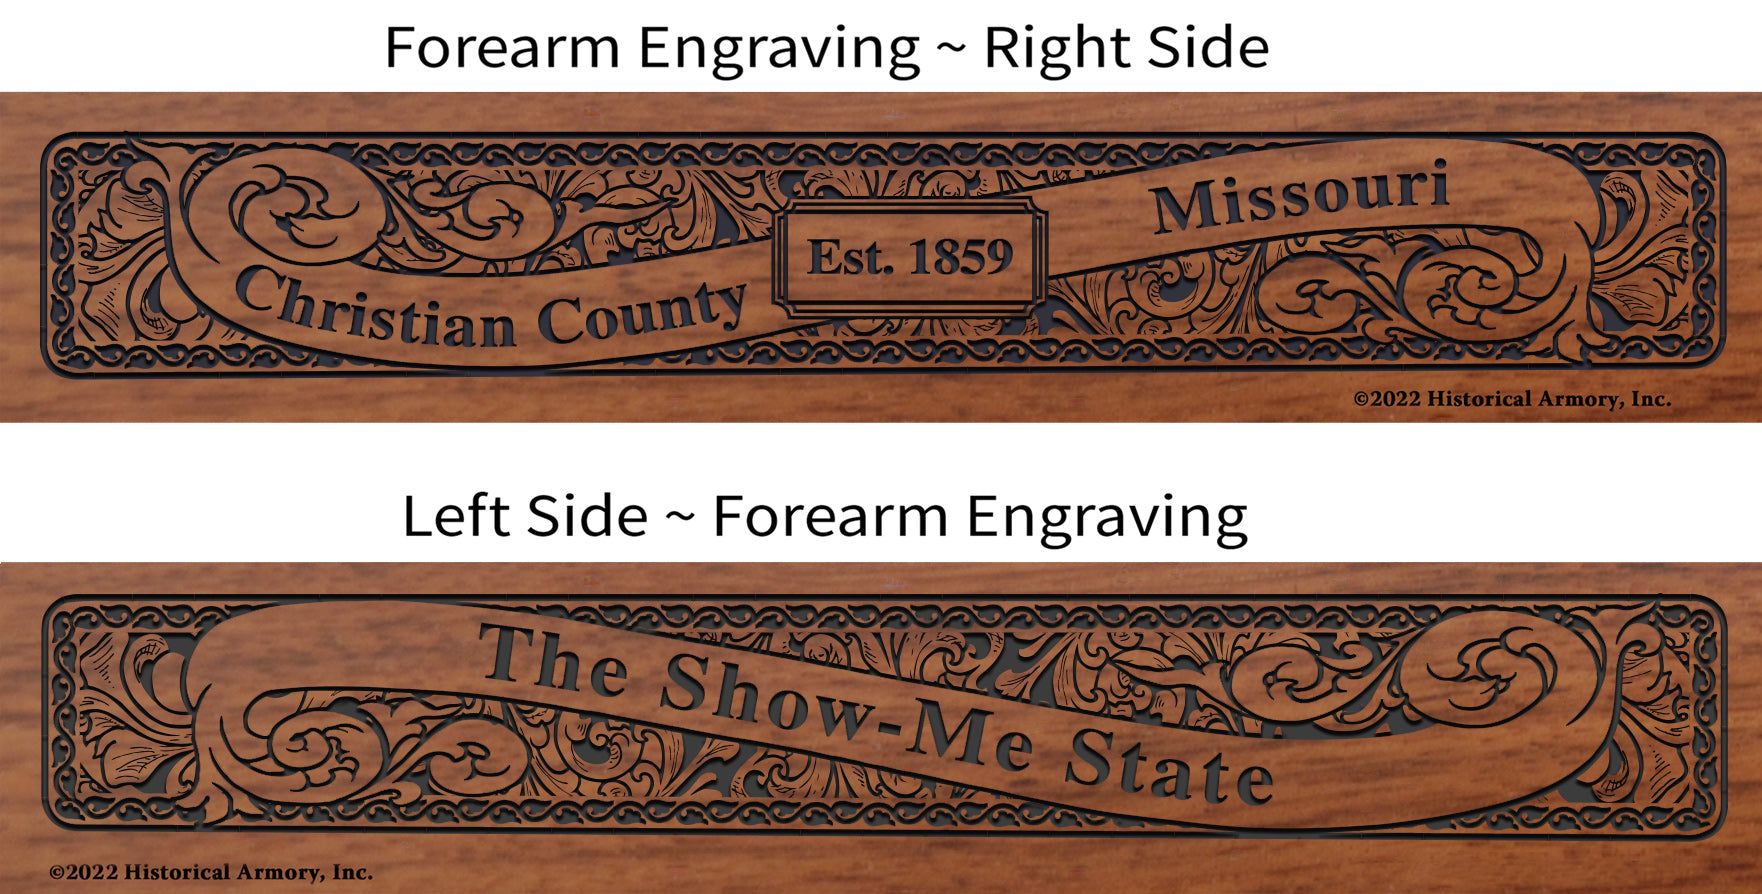 Christian County Missouri Engraved Rifle Forearm